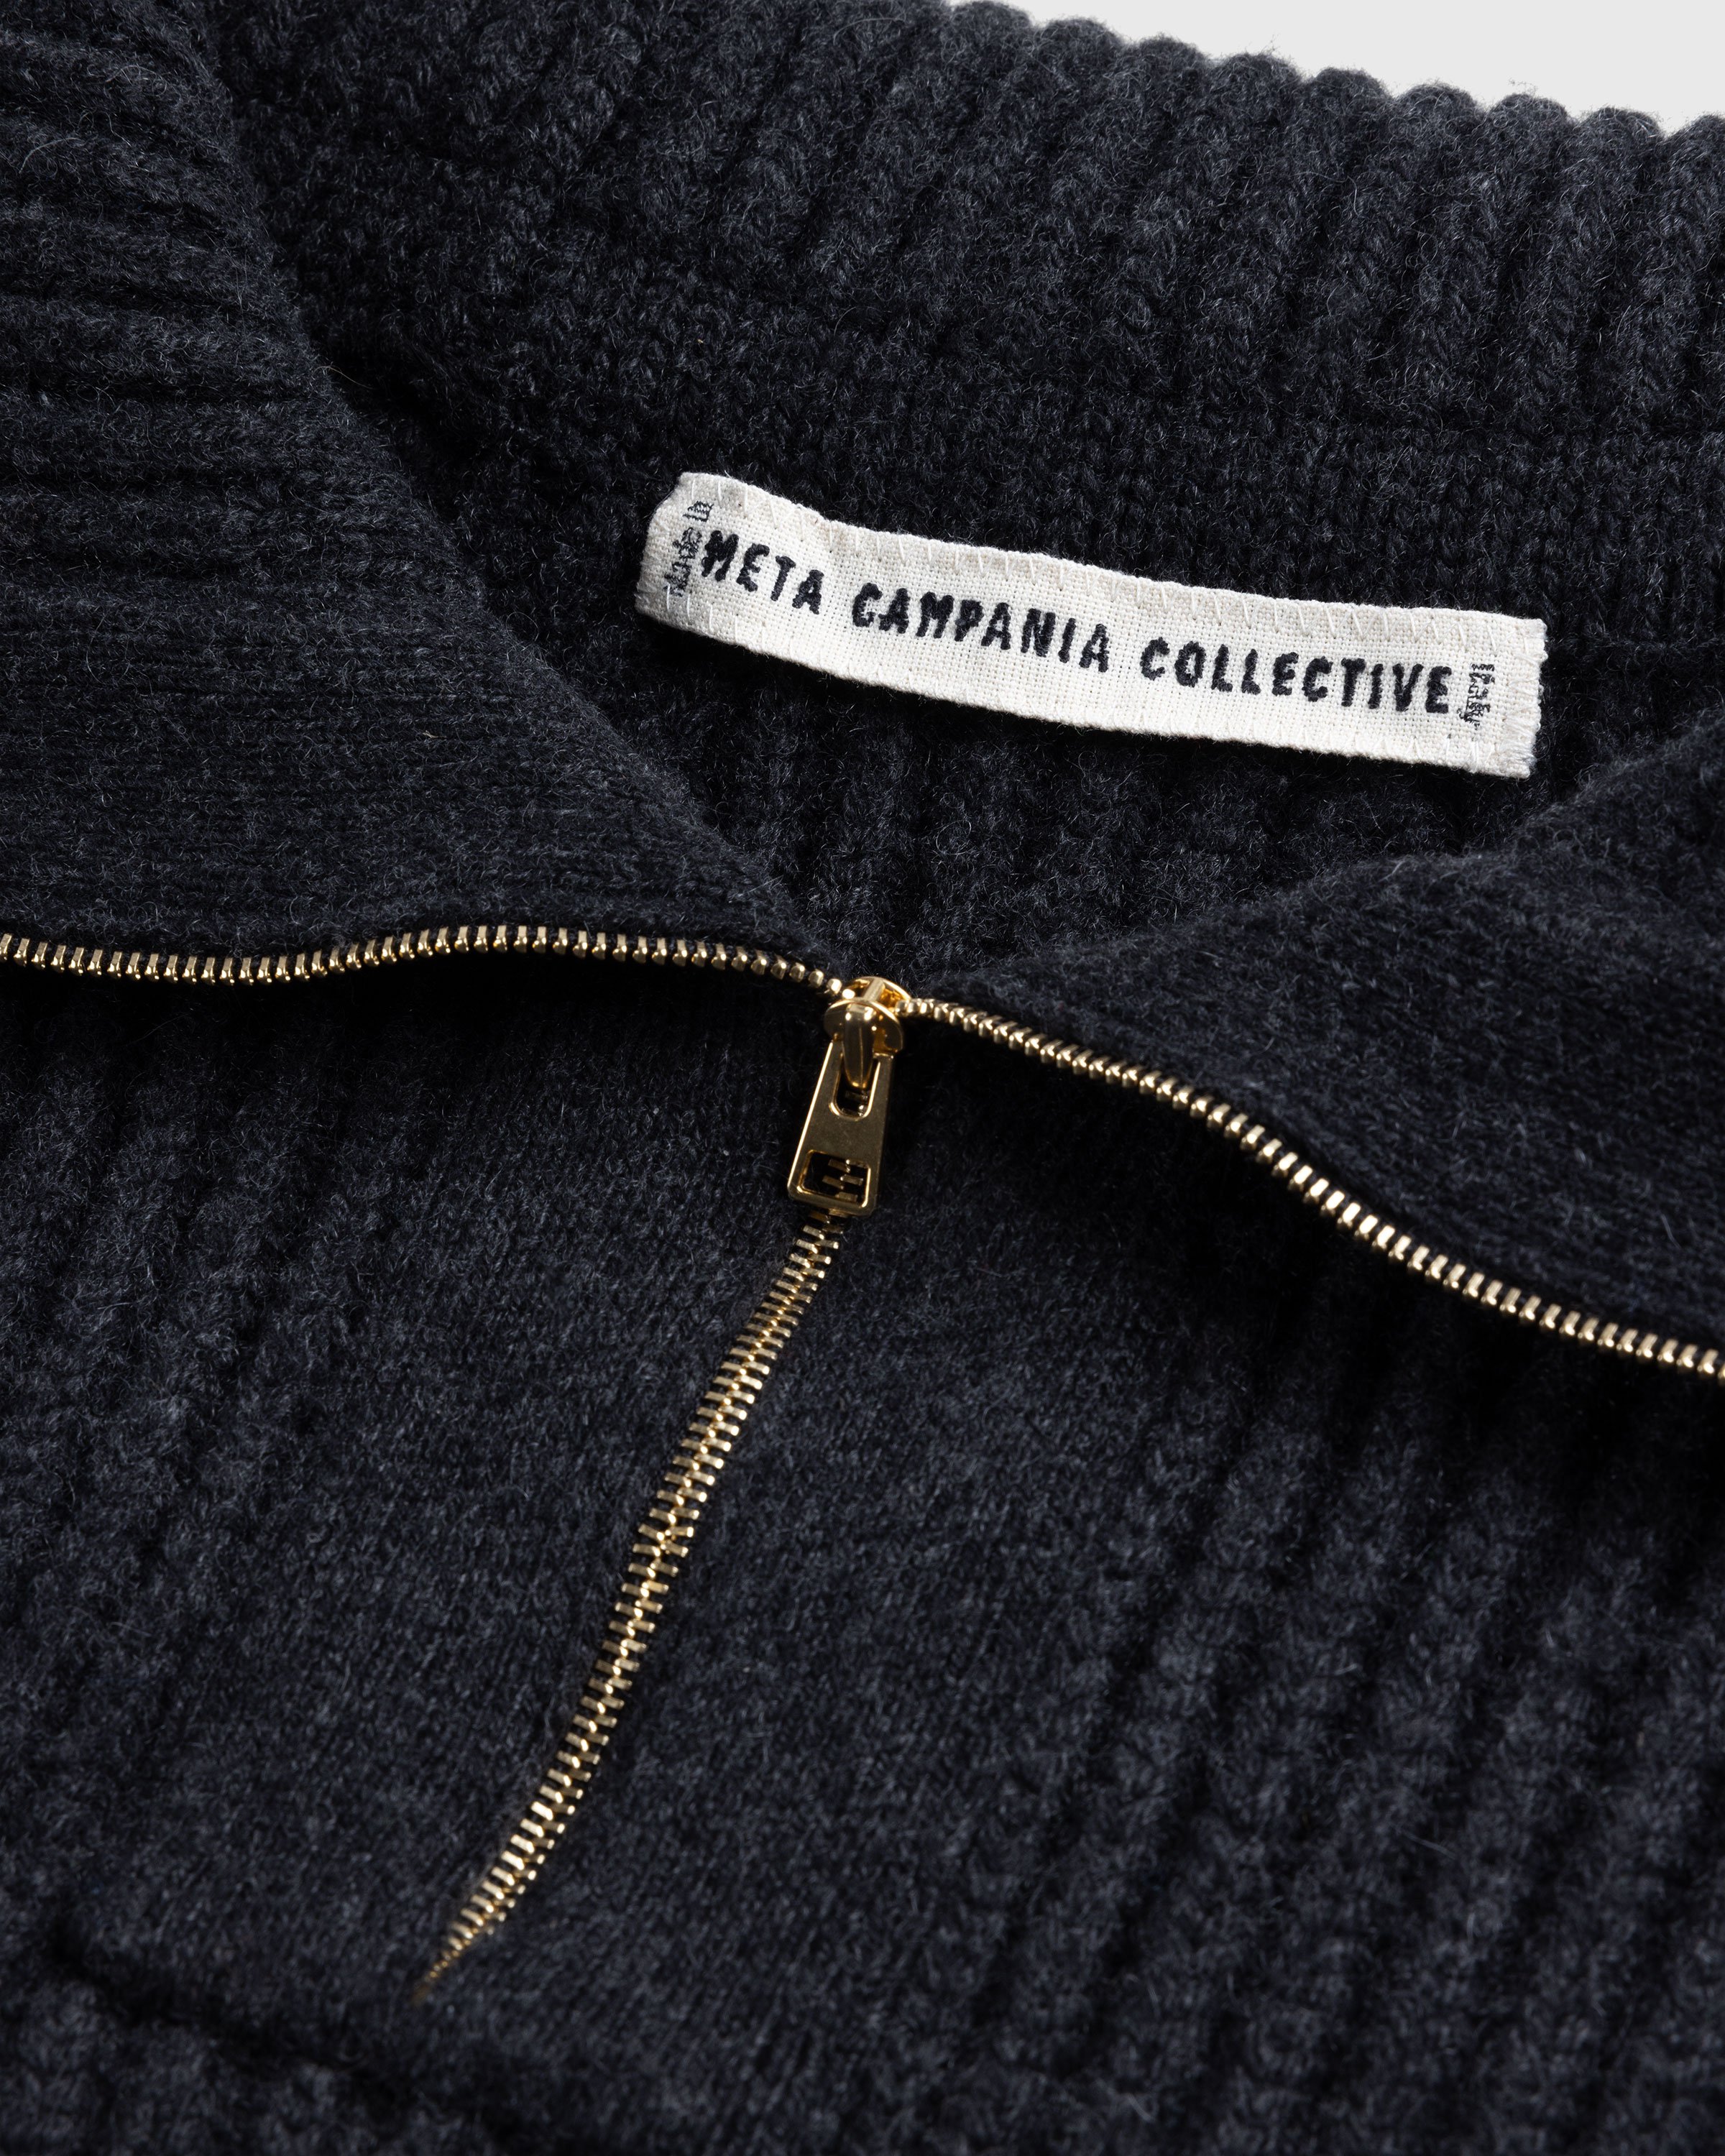 Meta Campania Collective - Michel Exaggerated Rib Cashmere Half Zip Weimaraner Grey - Clothing - Grey - Image 7